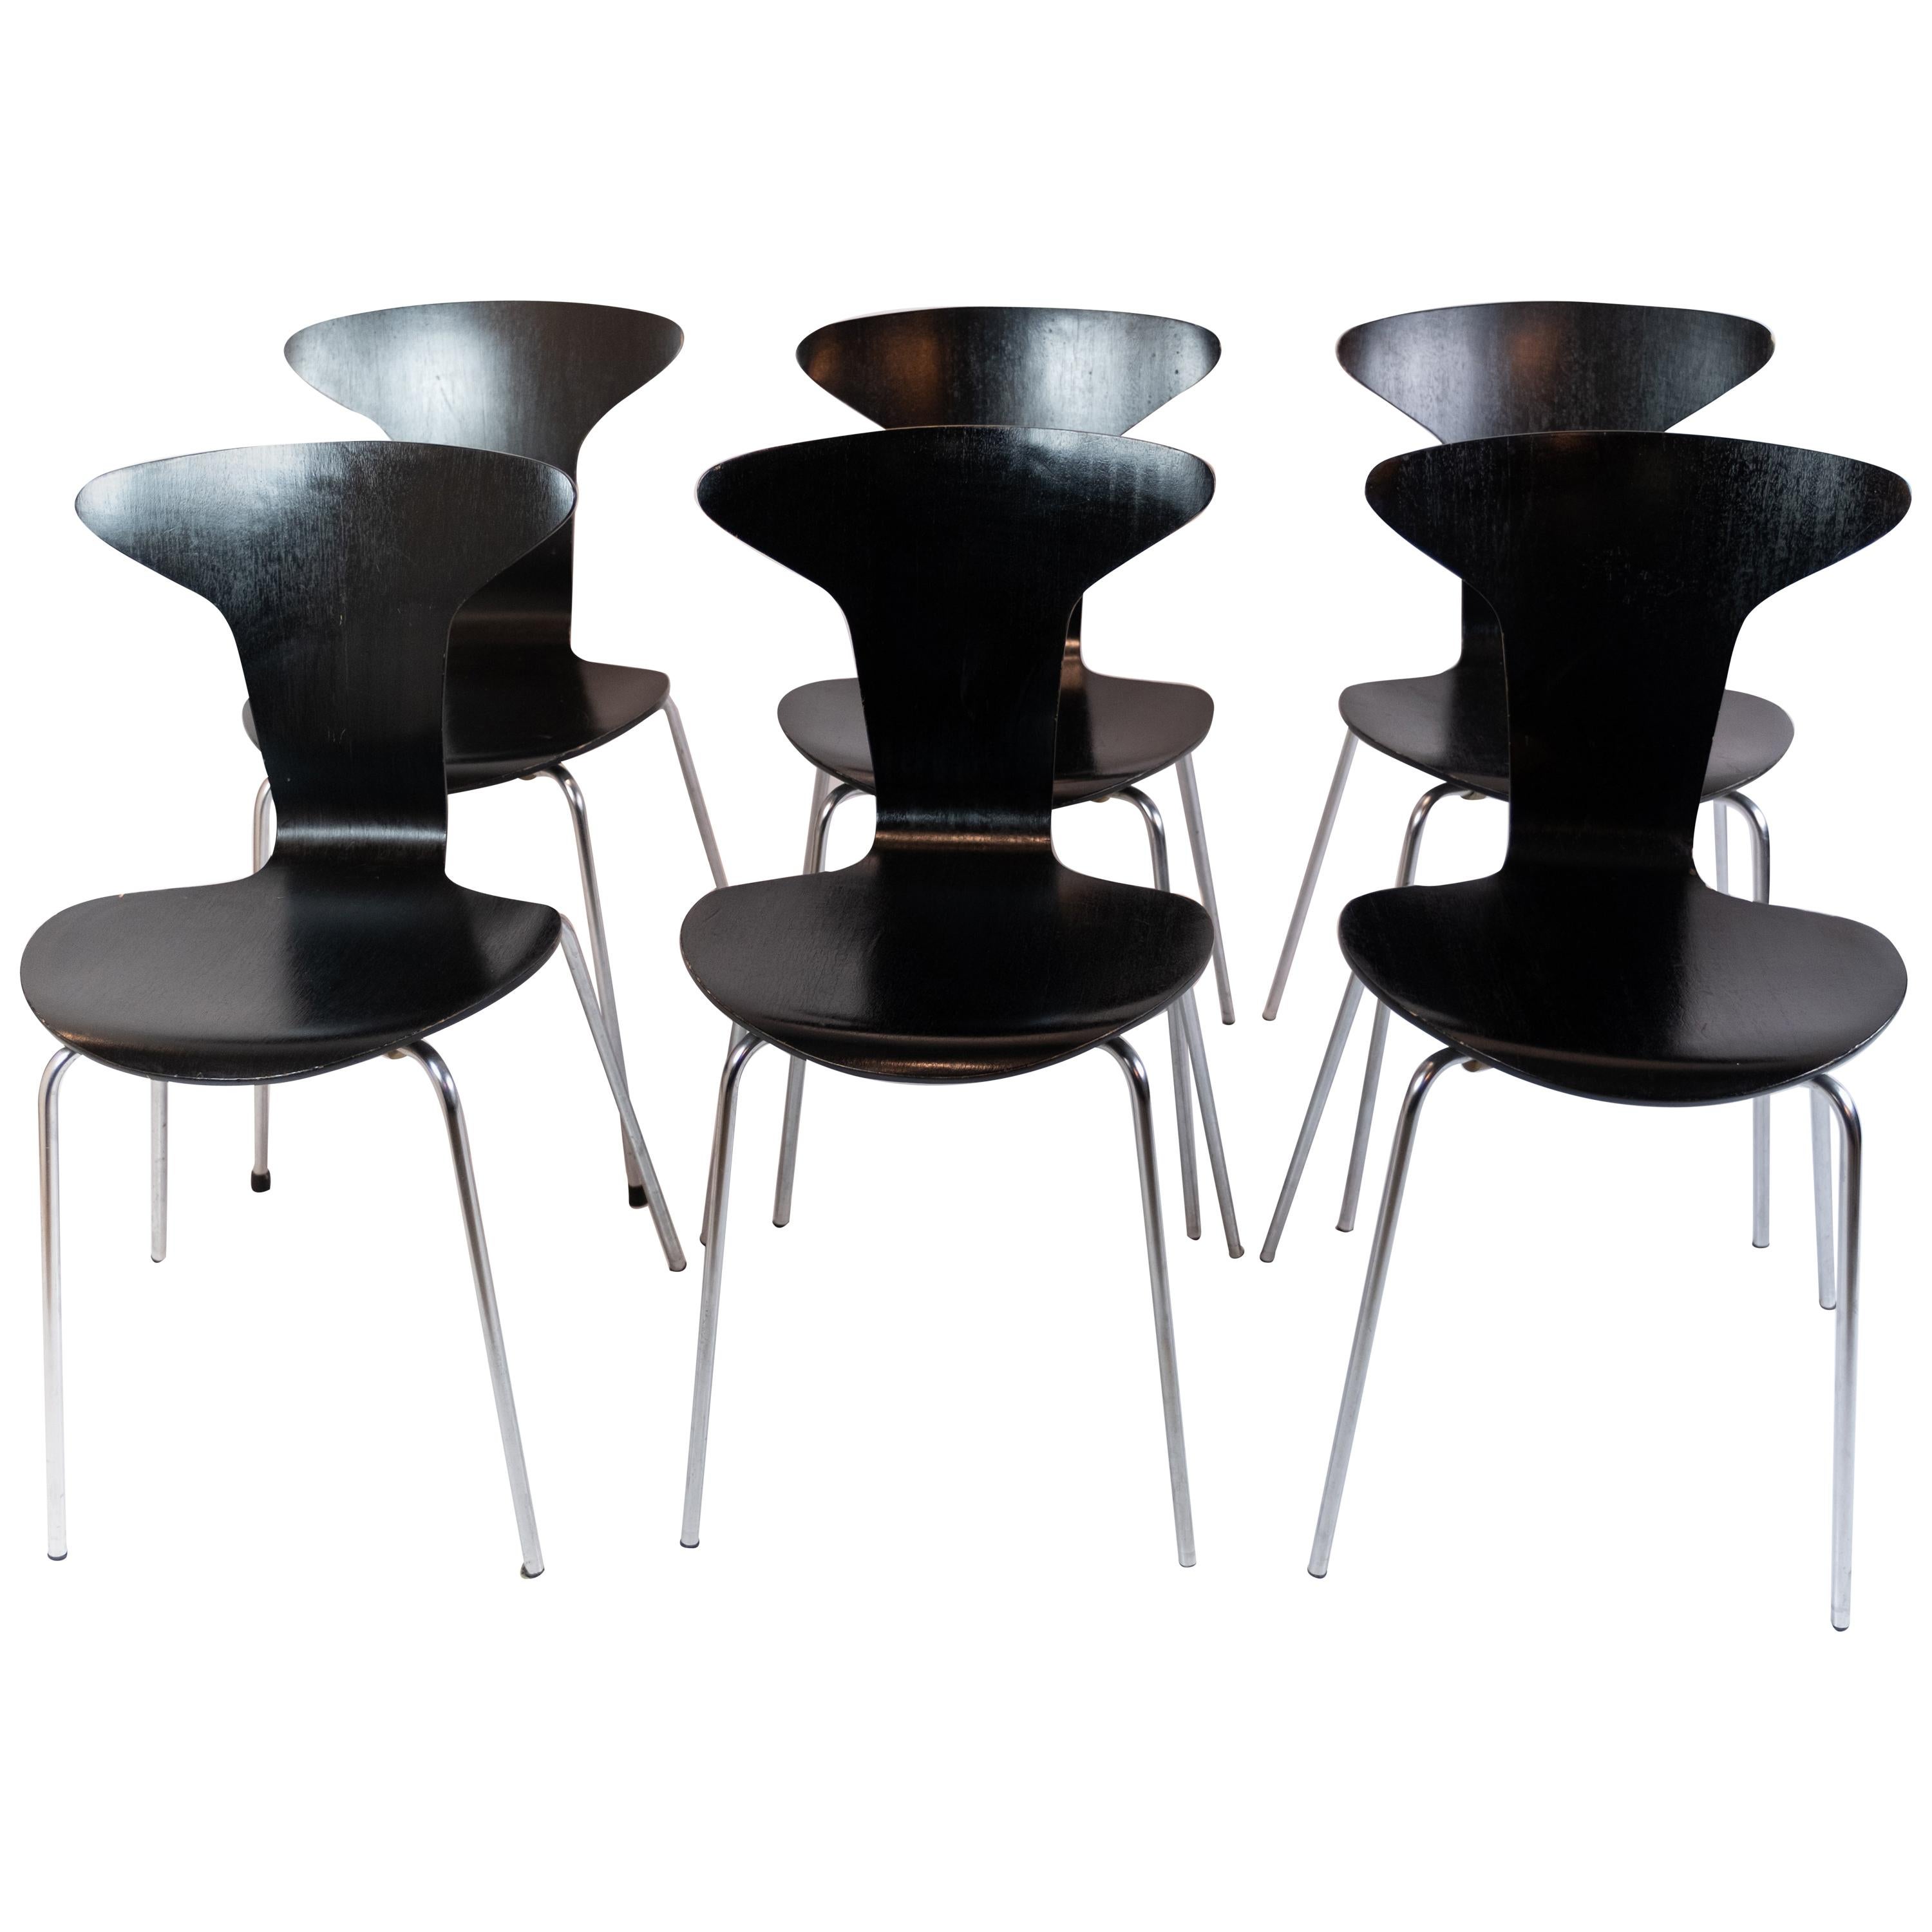 Set of 6 Black Munkegaard Designed by Arne Jacobsen in 1955